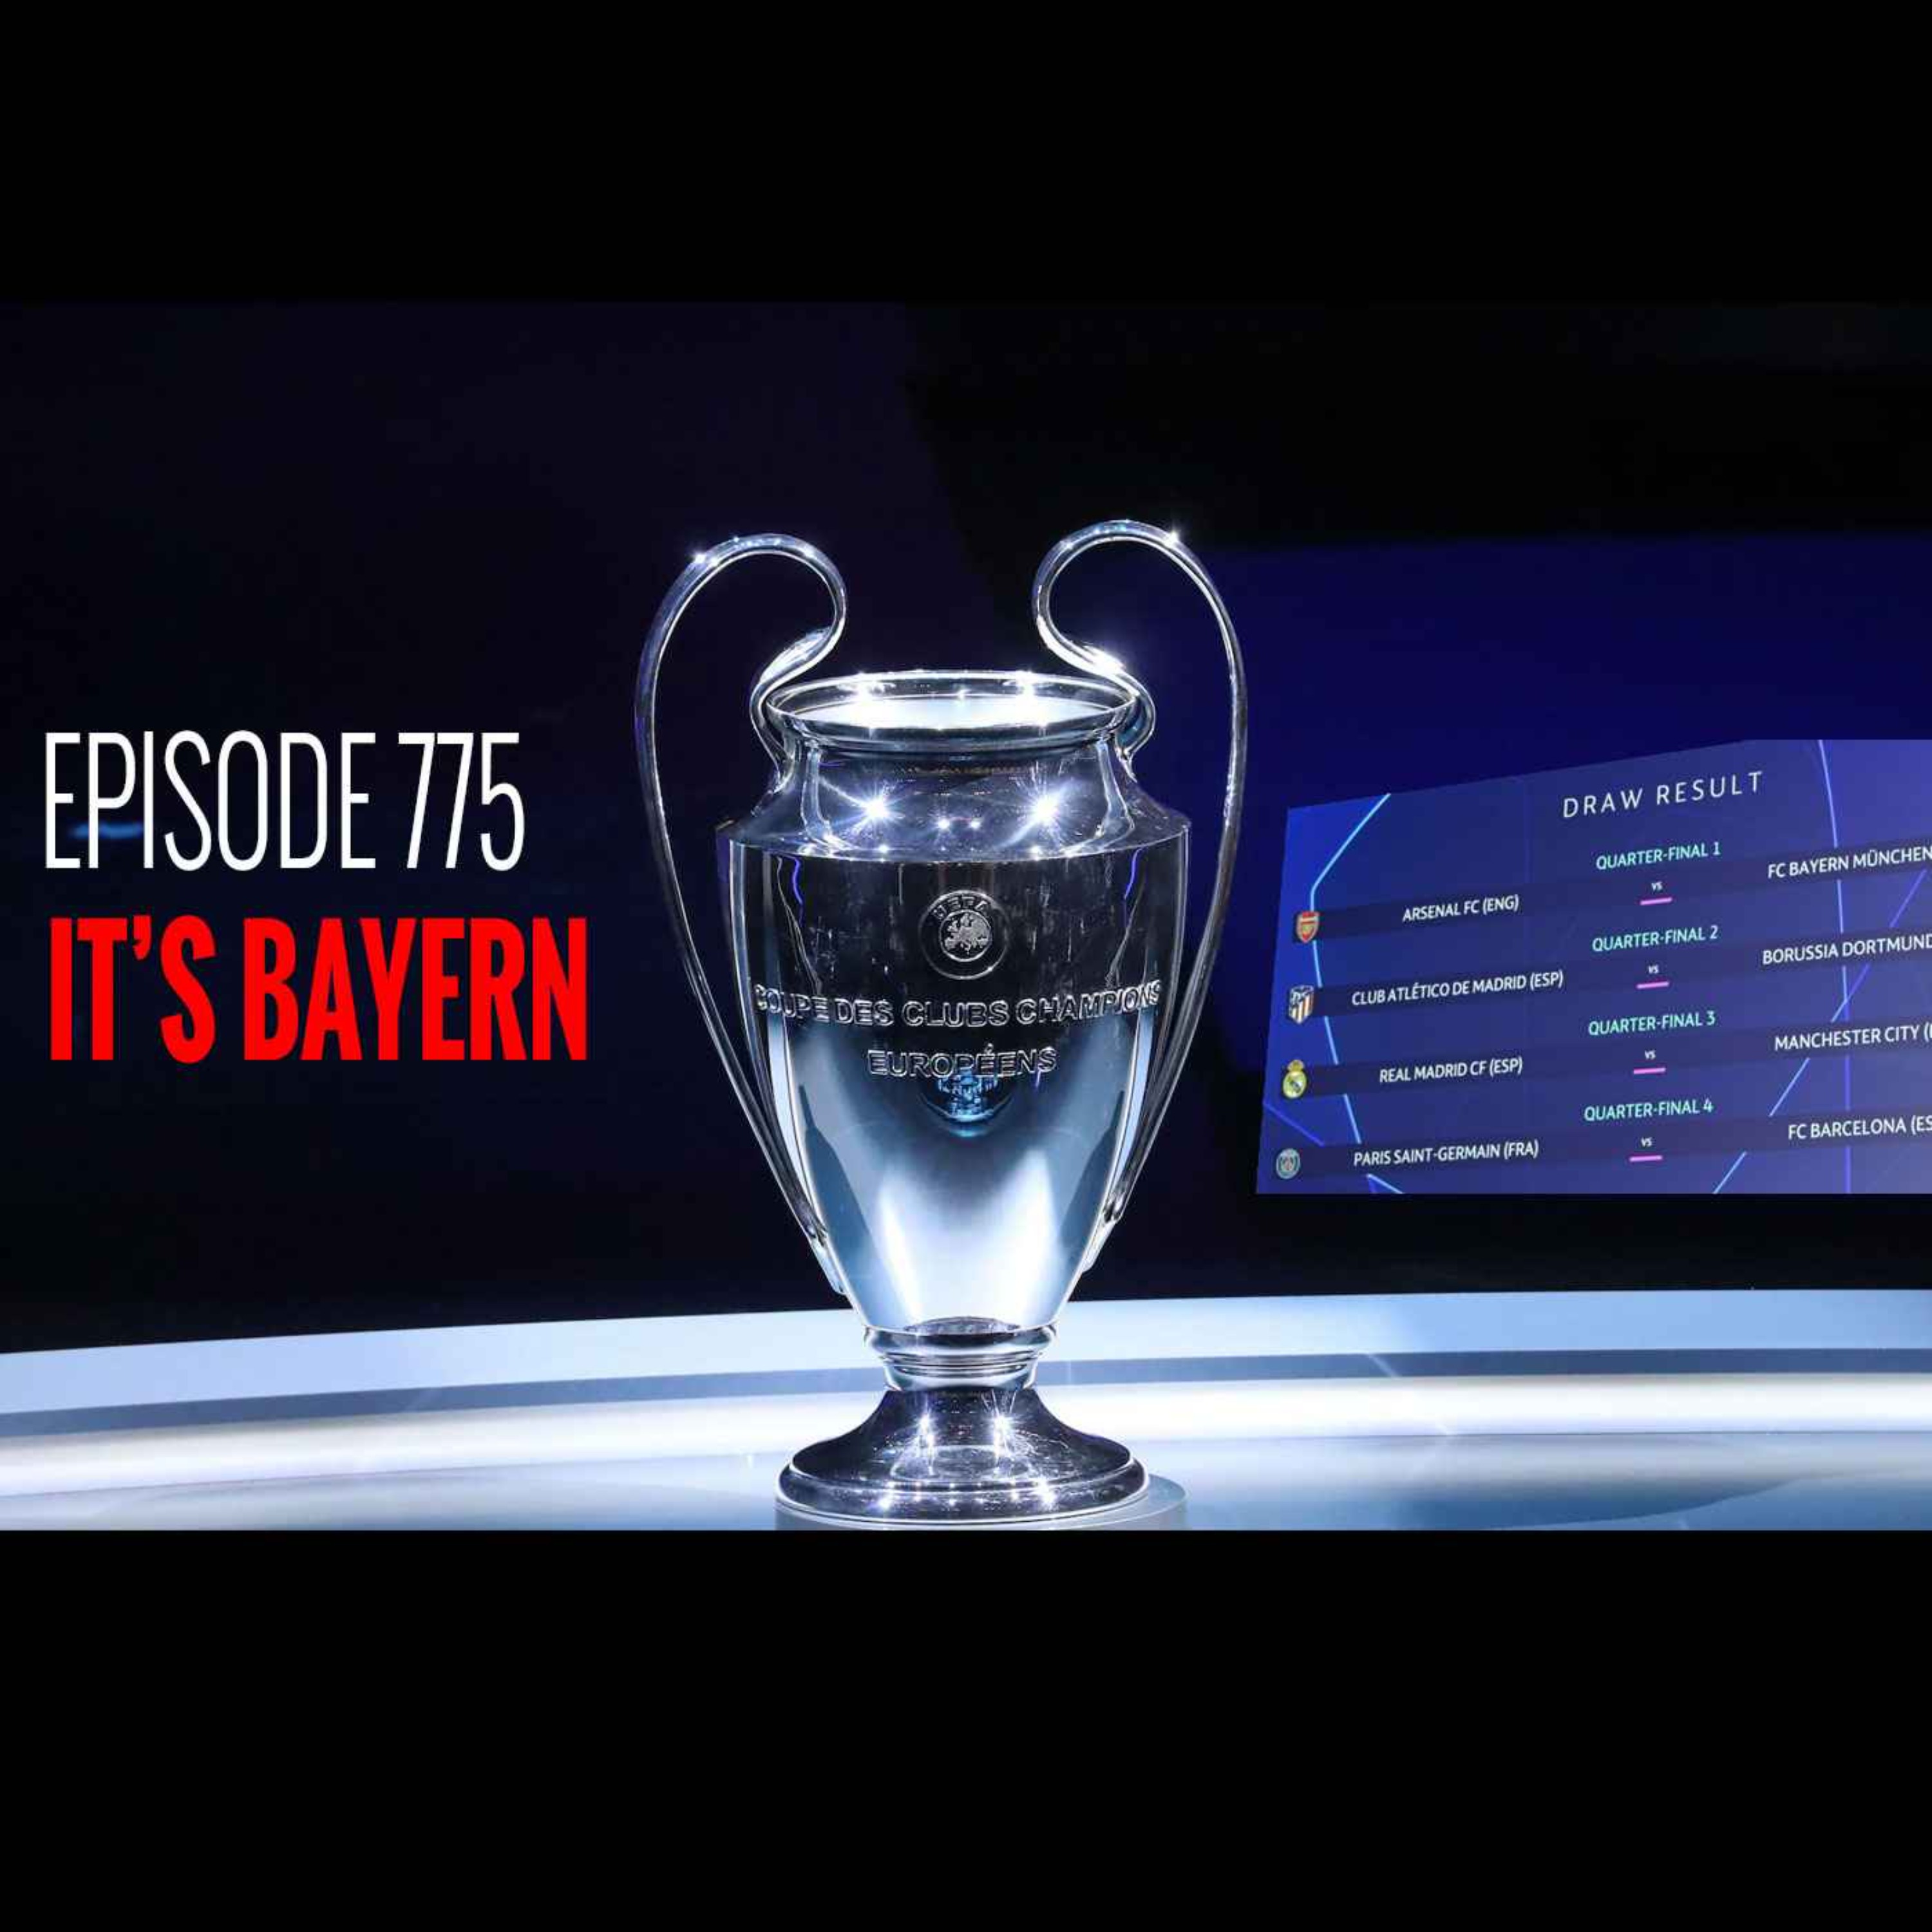 Episode 775 - It’s Bayern